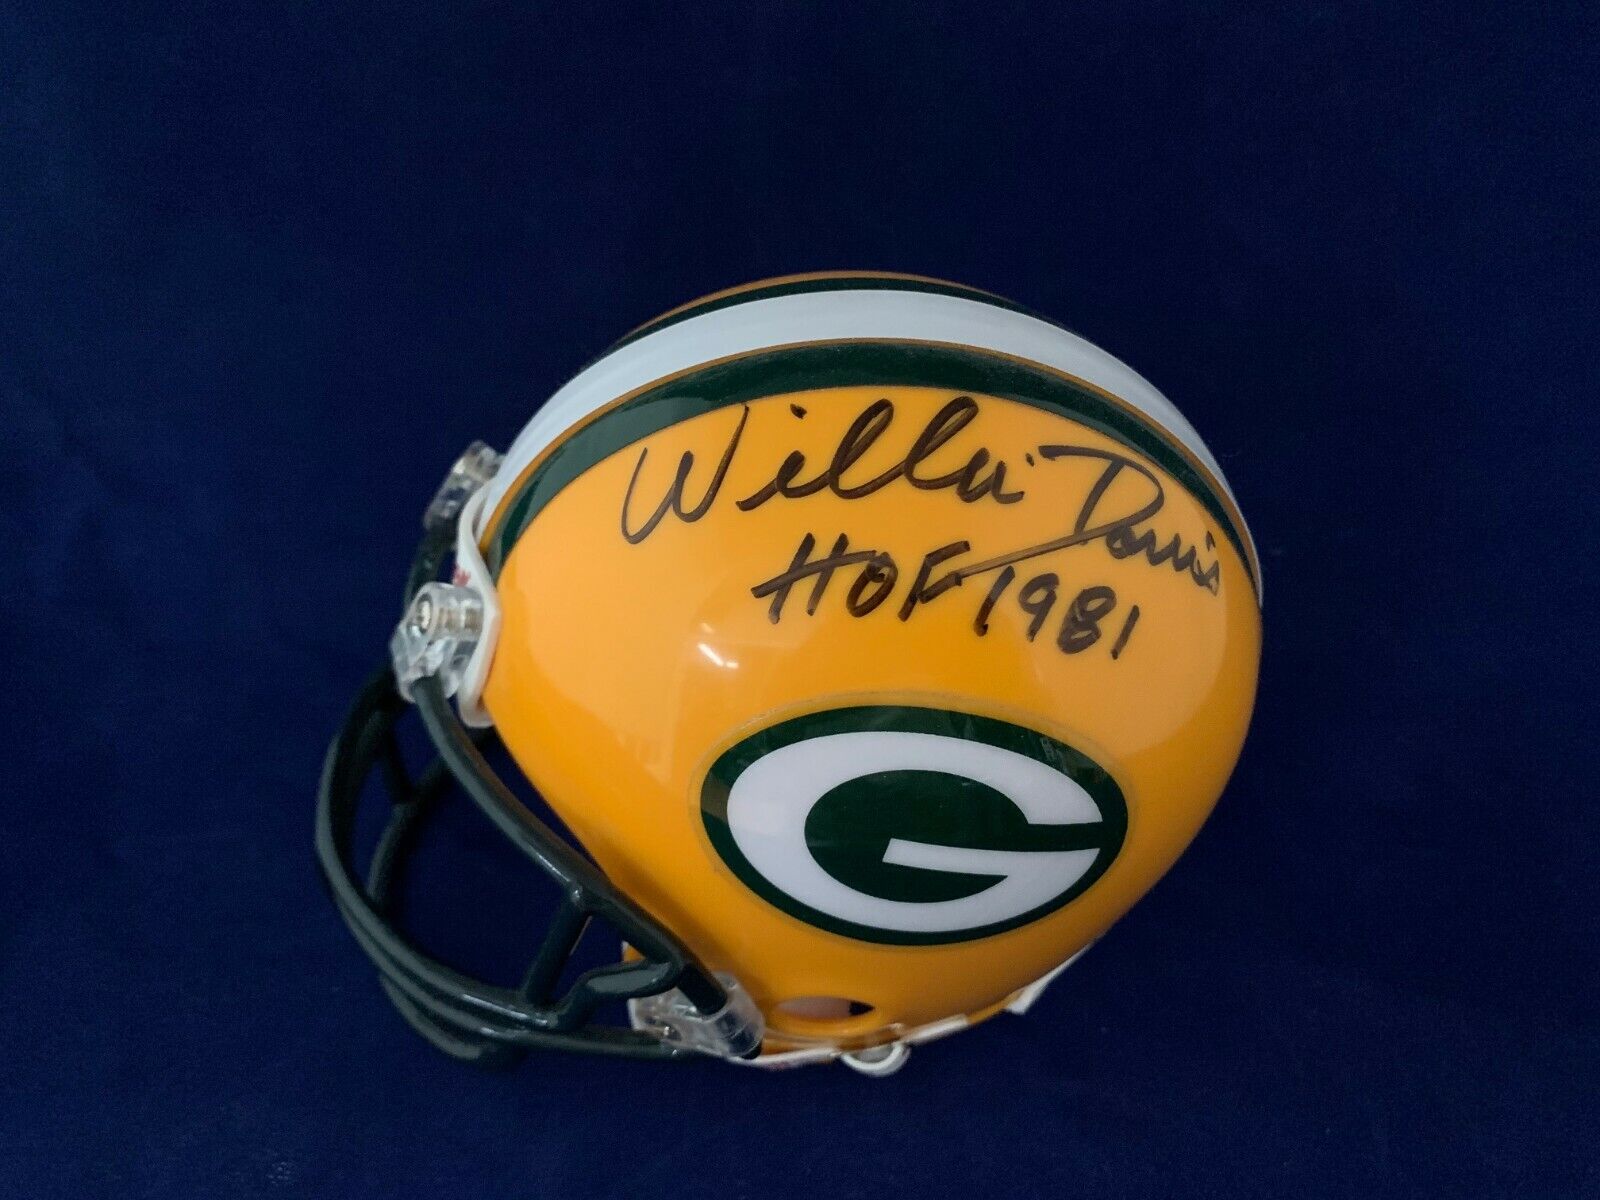 Willie Davis Packers HOF 1981 Signed Autographed Mini Helmet with Cert